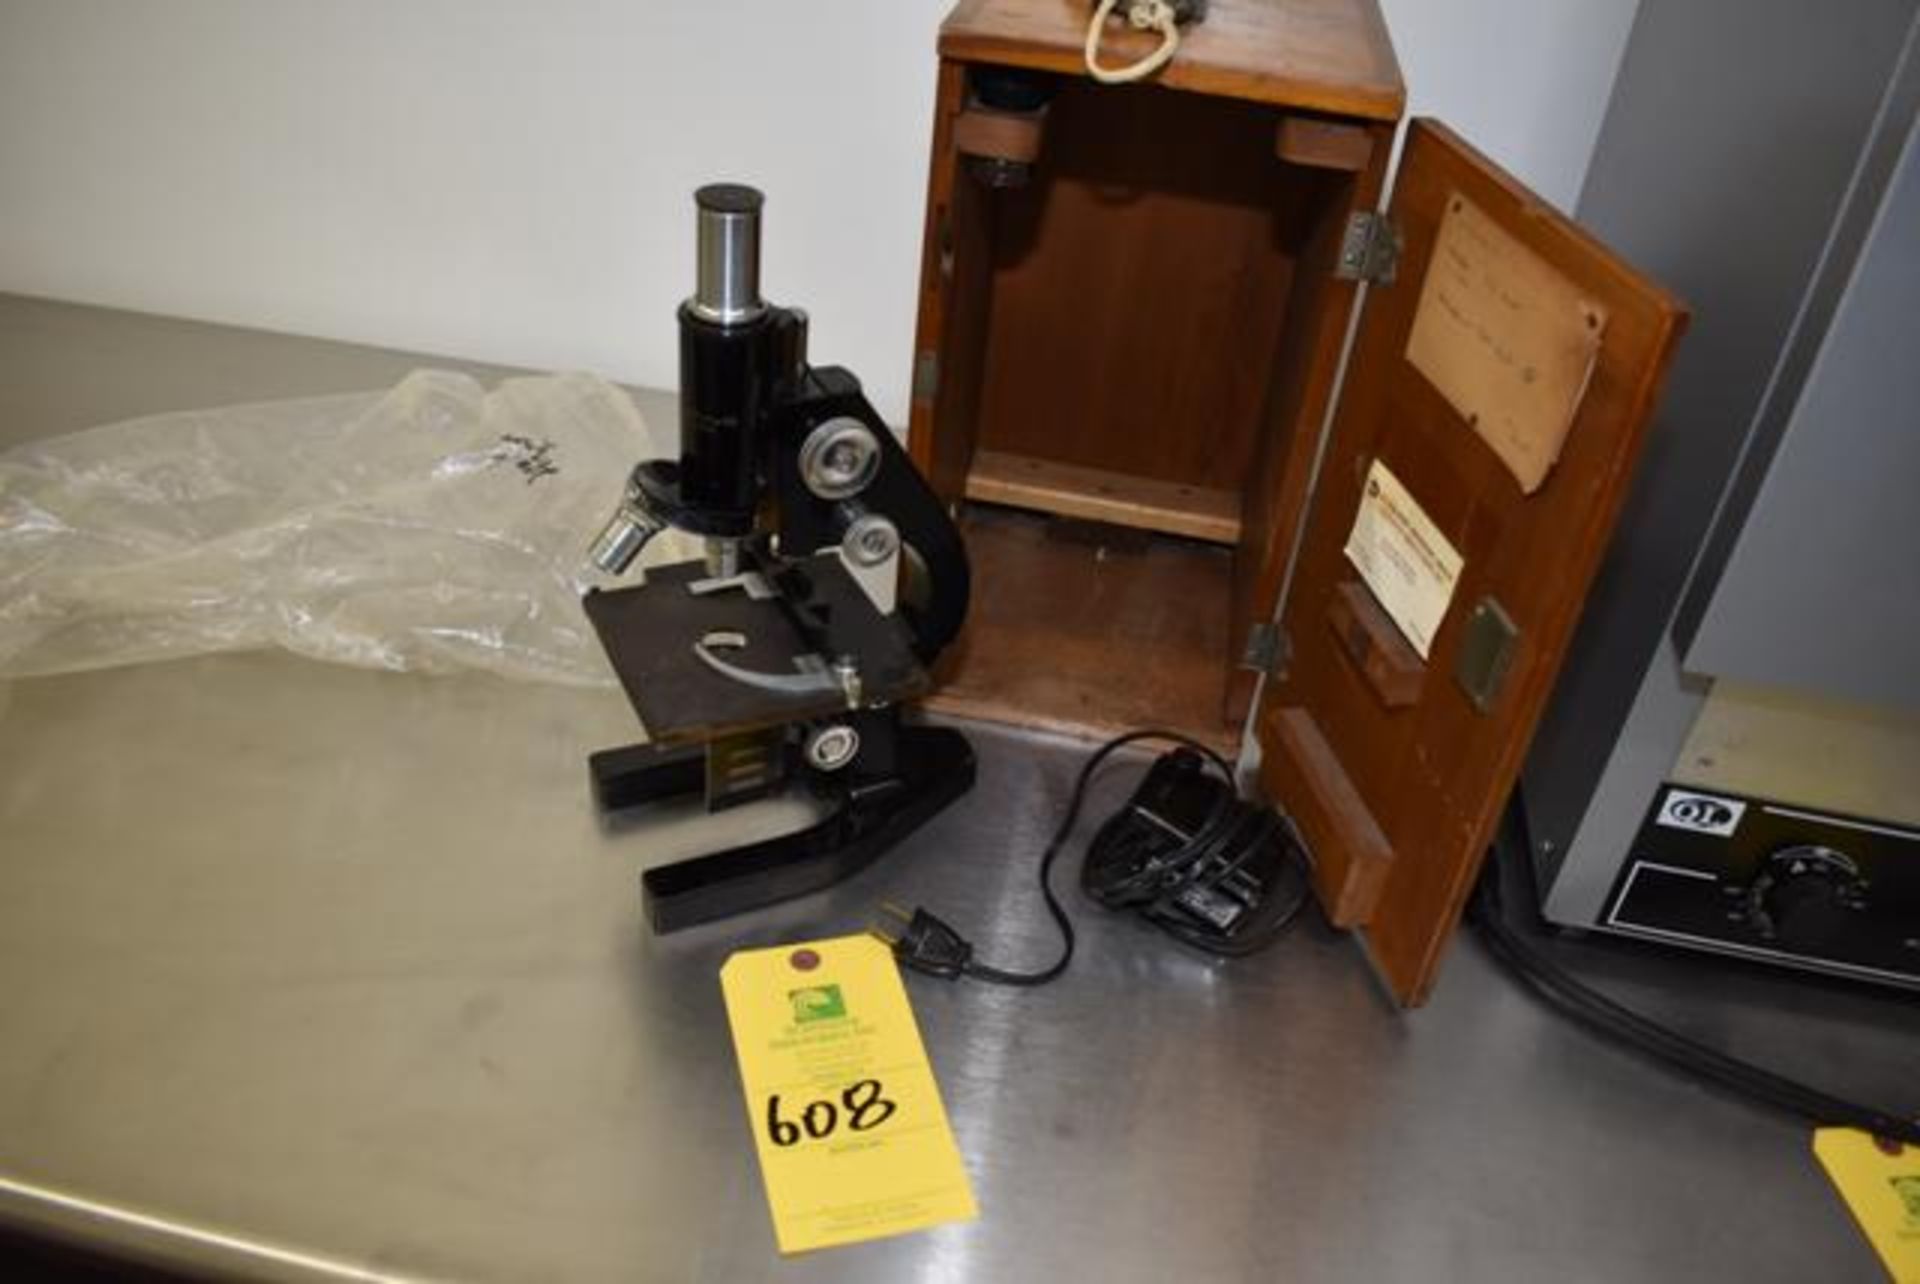 Bausch Microscope w/Case, Loading Fee: $10